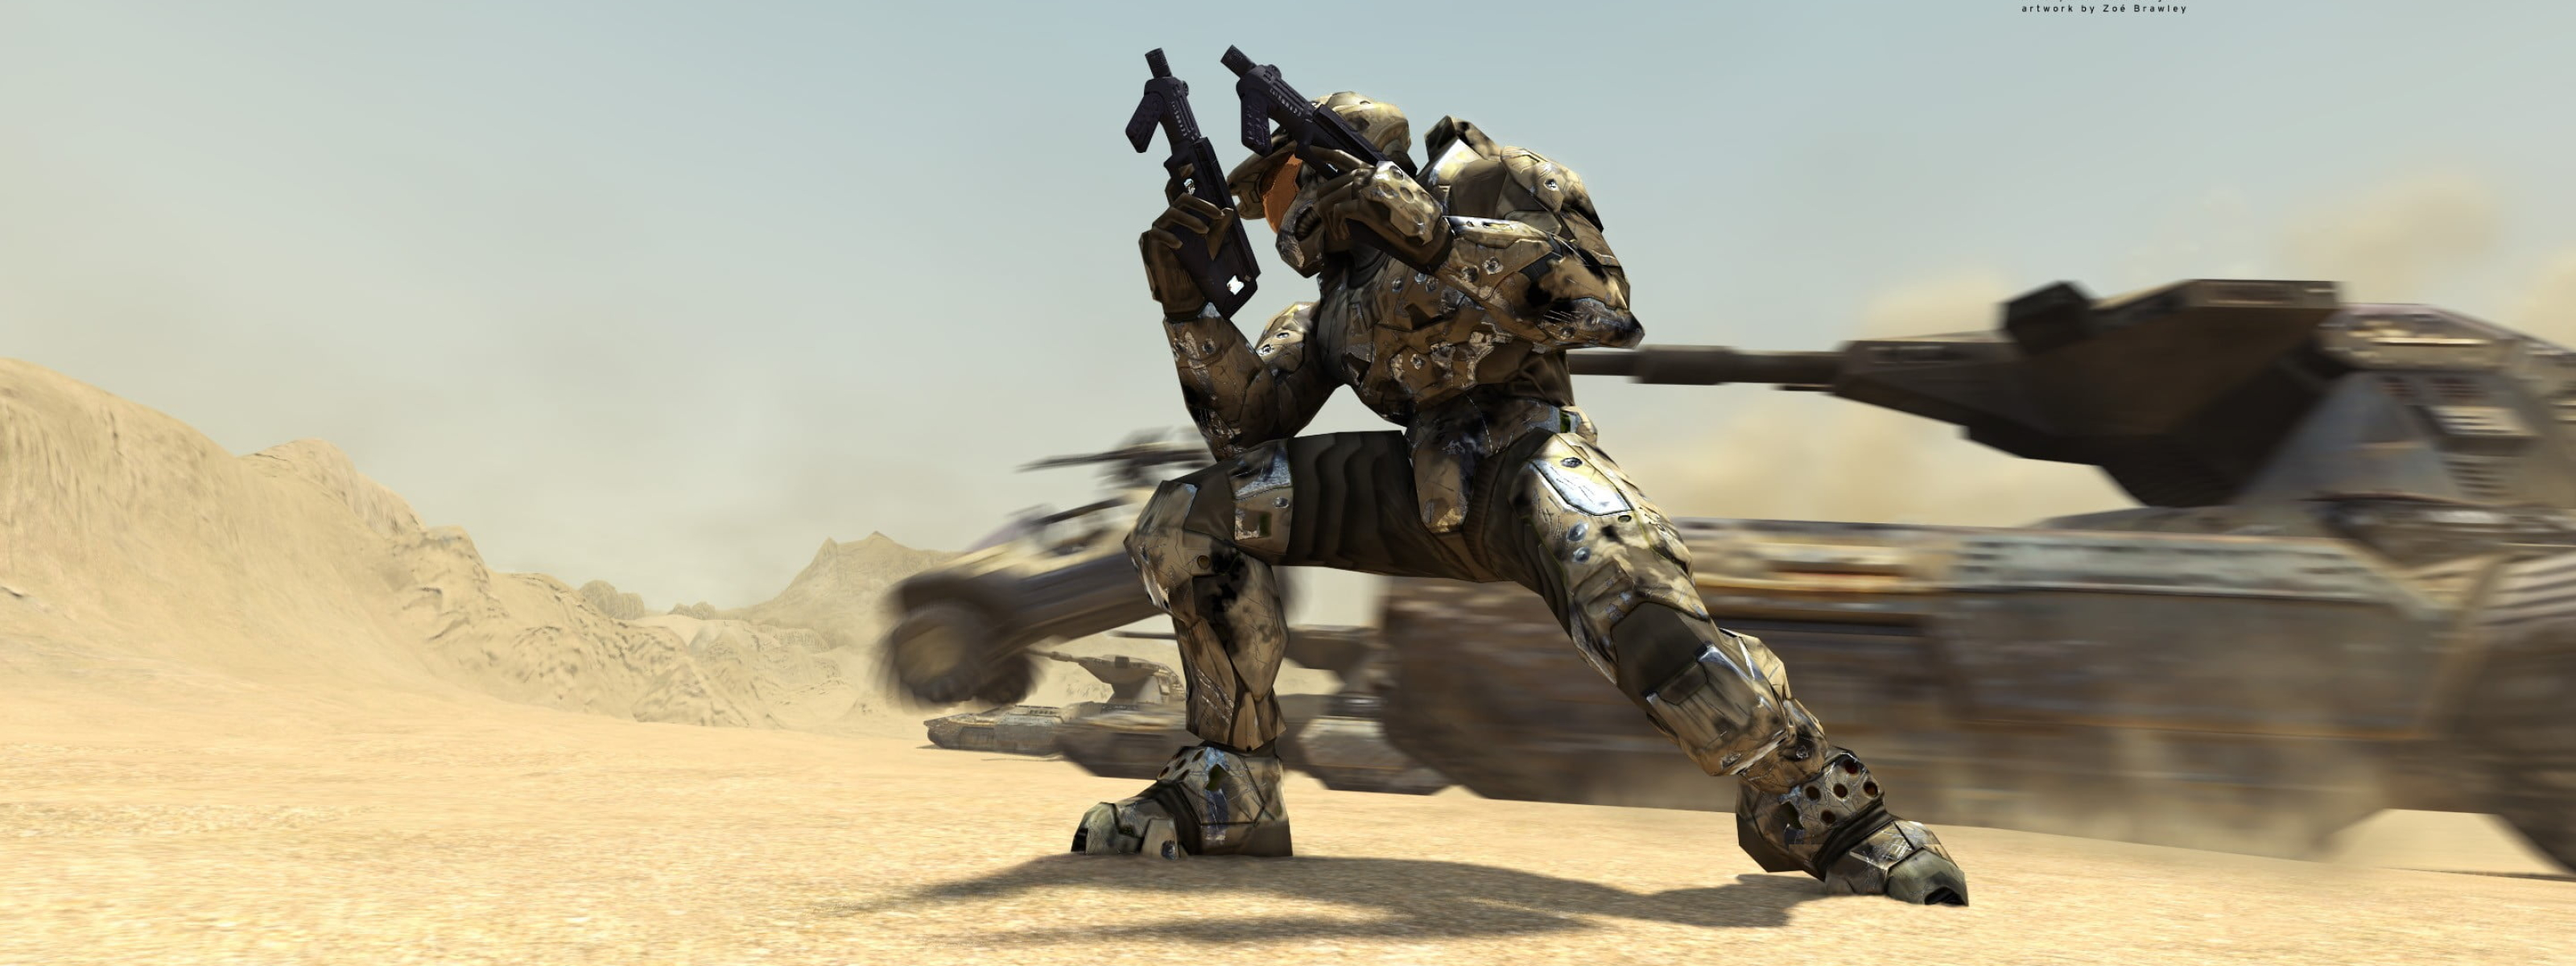 Halo 2 digital wallpaper, Master Chief's journey, HD visuals, Epic battle scenes, 3200x1200 Dual Screen Desktop